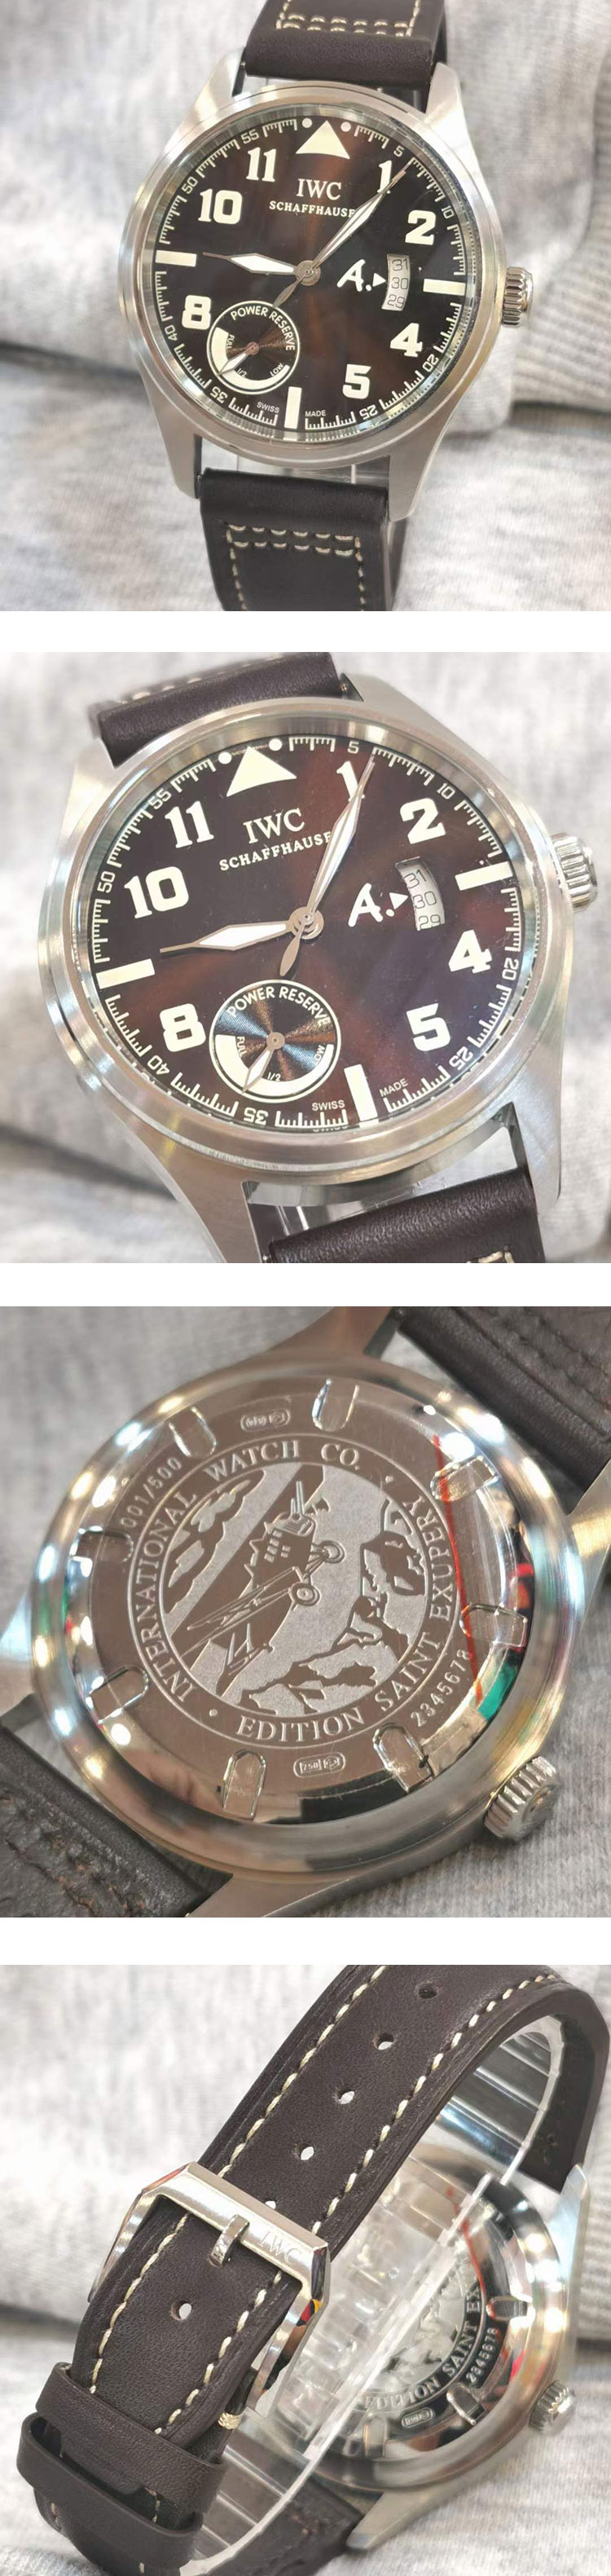 IWCコピー時計ブランド パイロットクロノ オートマティック サンテグジュペリ IW320104